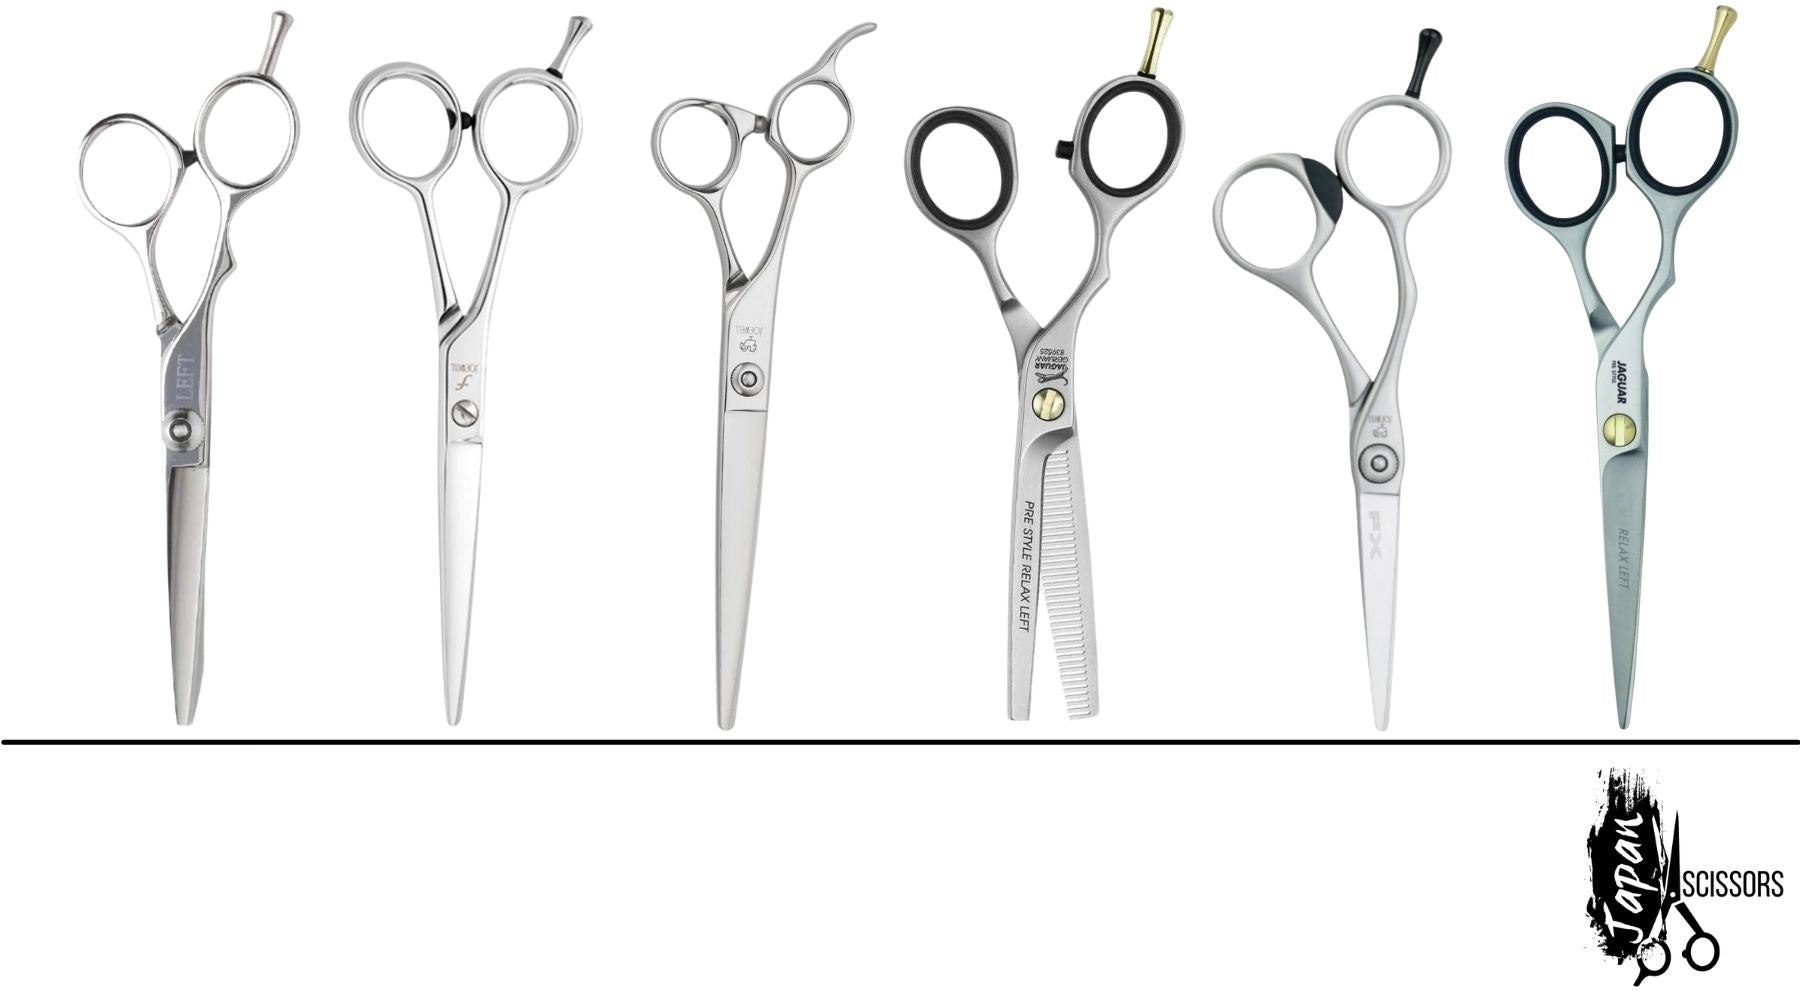 Roseline - Hair Thinning Scissors, Left Hand, 39 Teeth, Single Cut